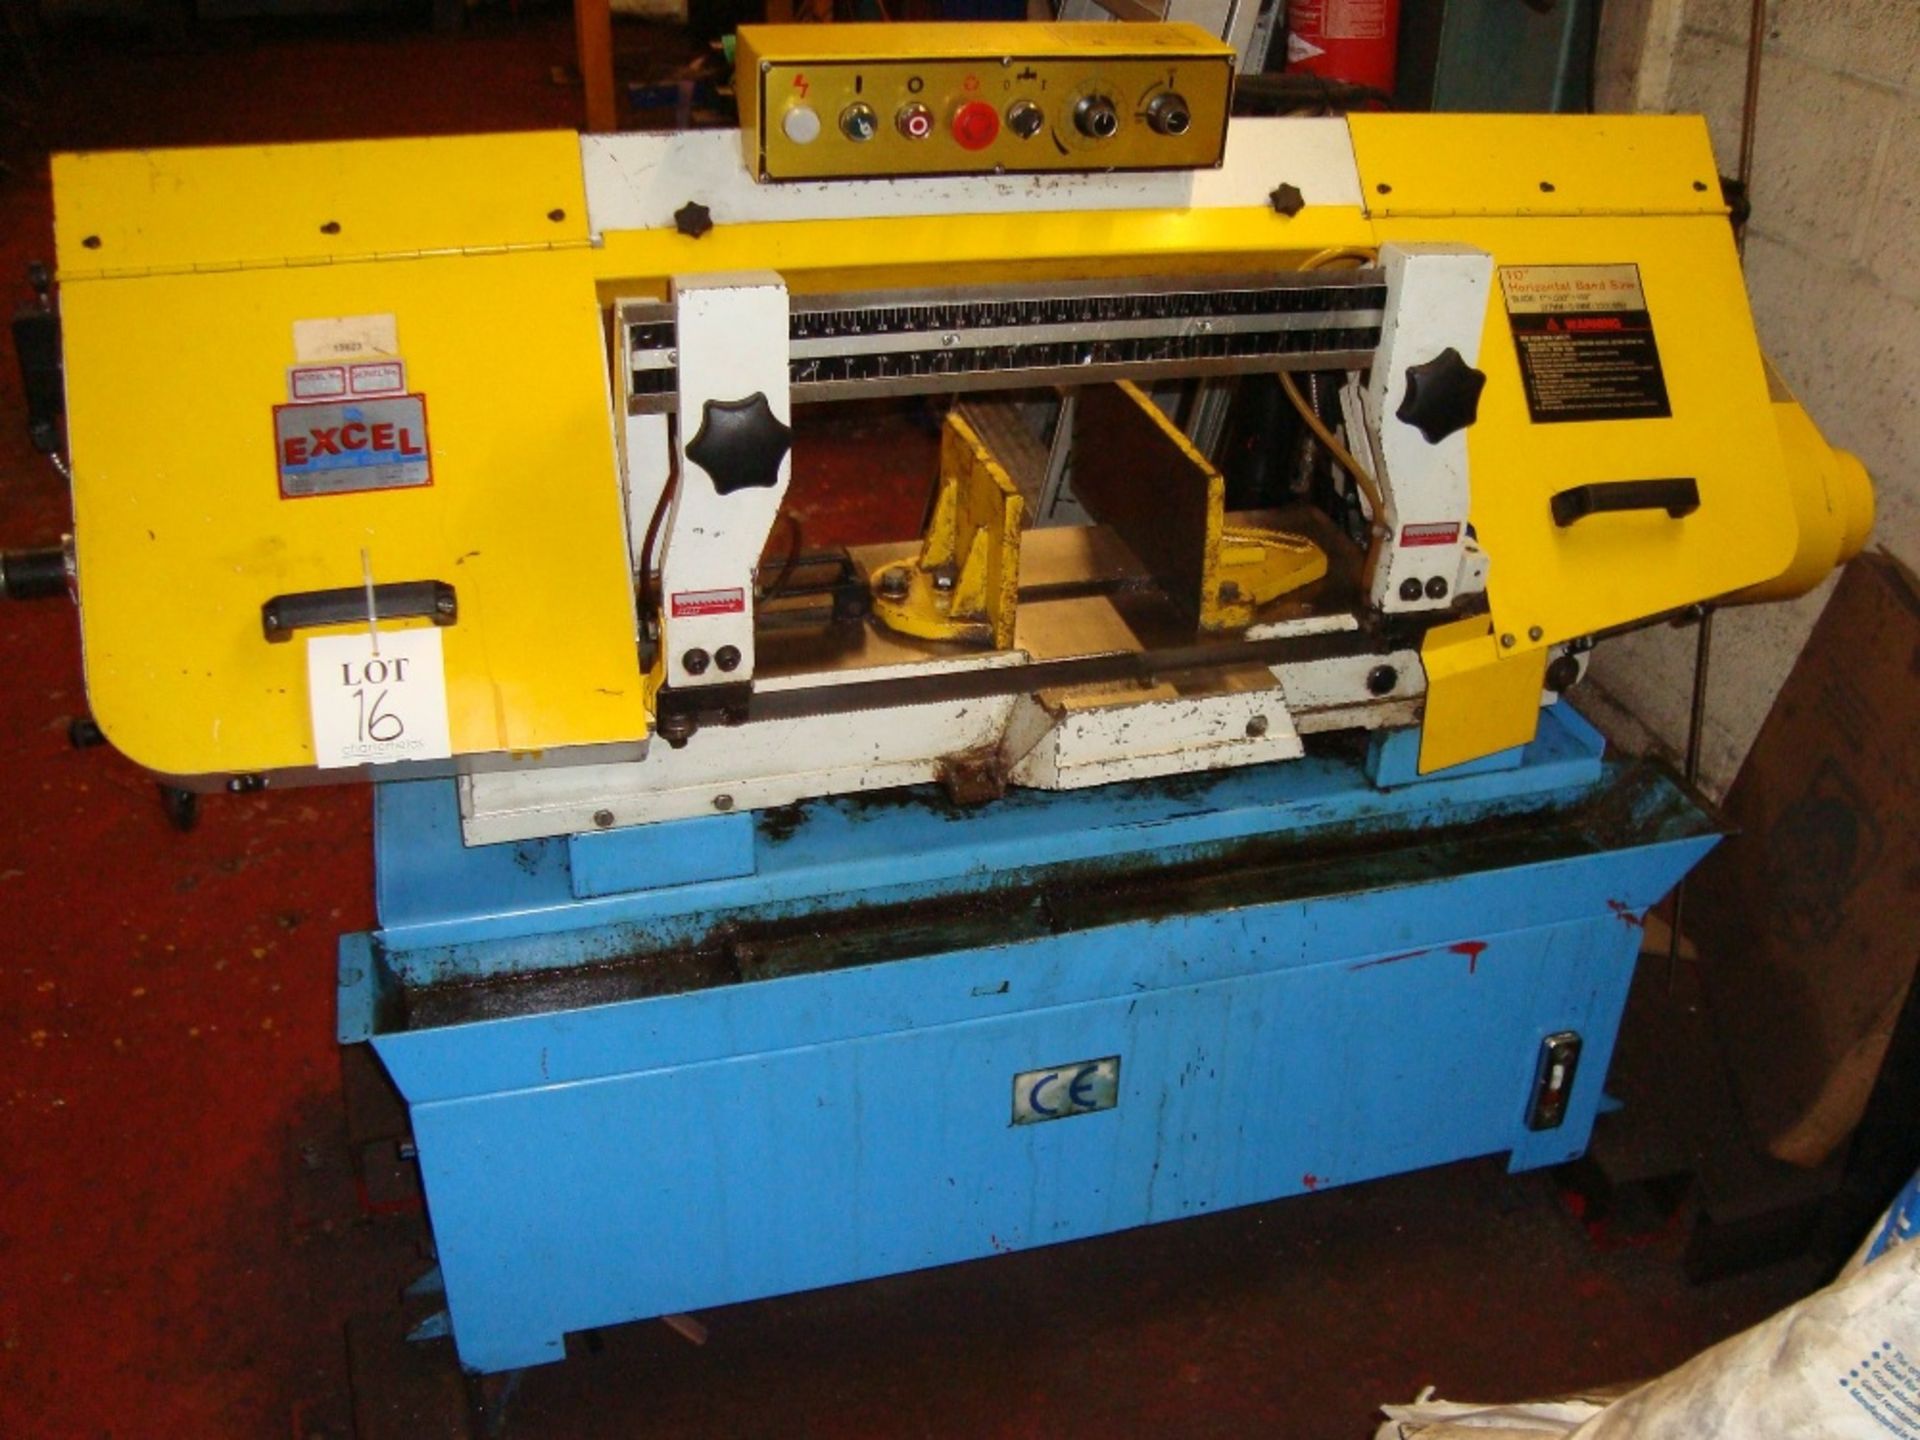 An Excel PBS250V 10" horizontal band sawing machine, Serial No. 06057841